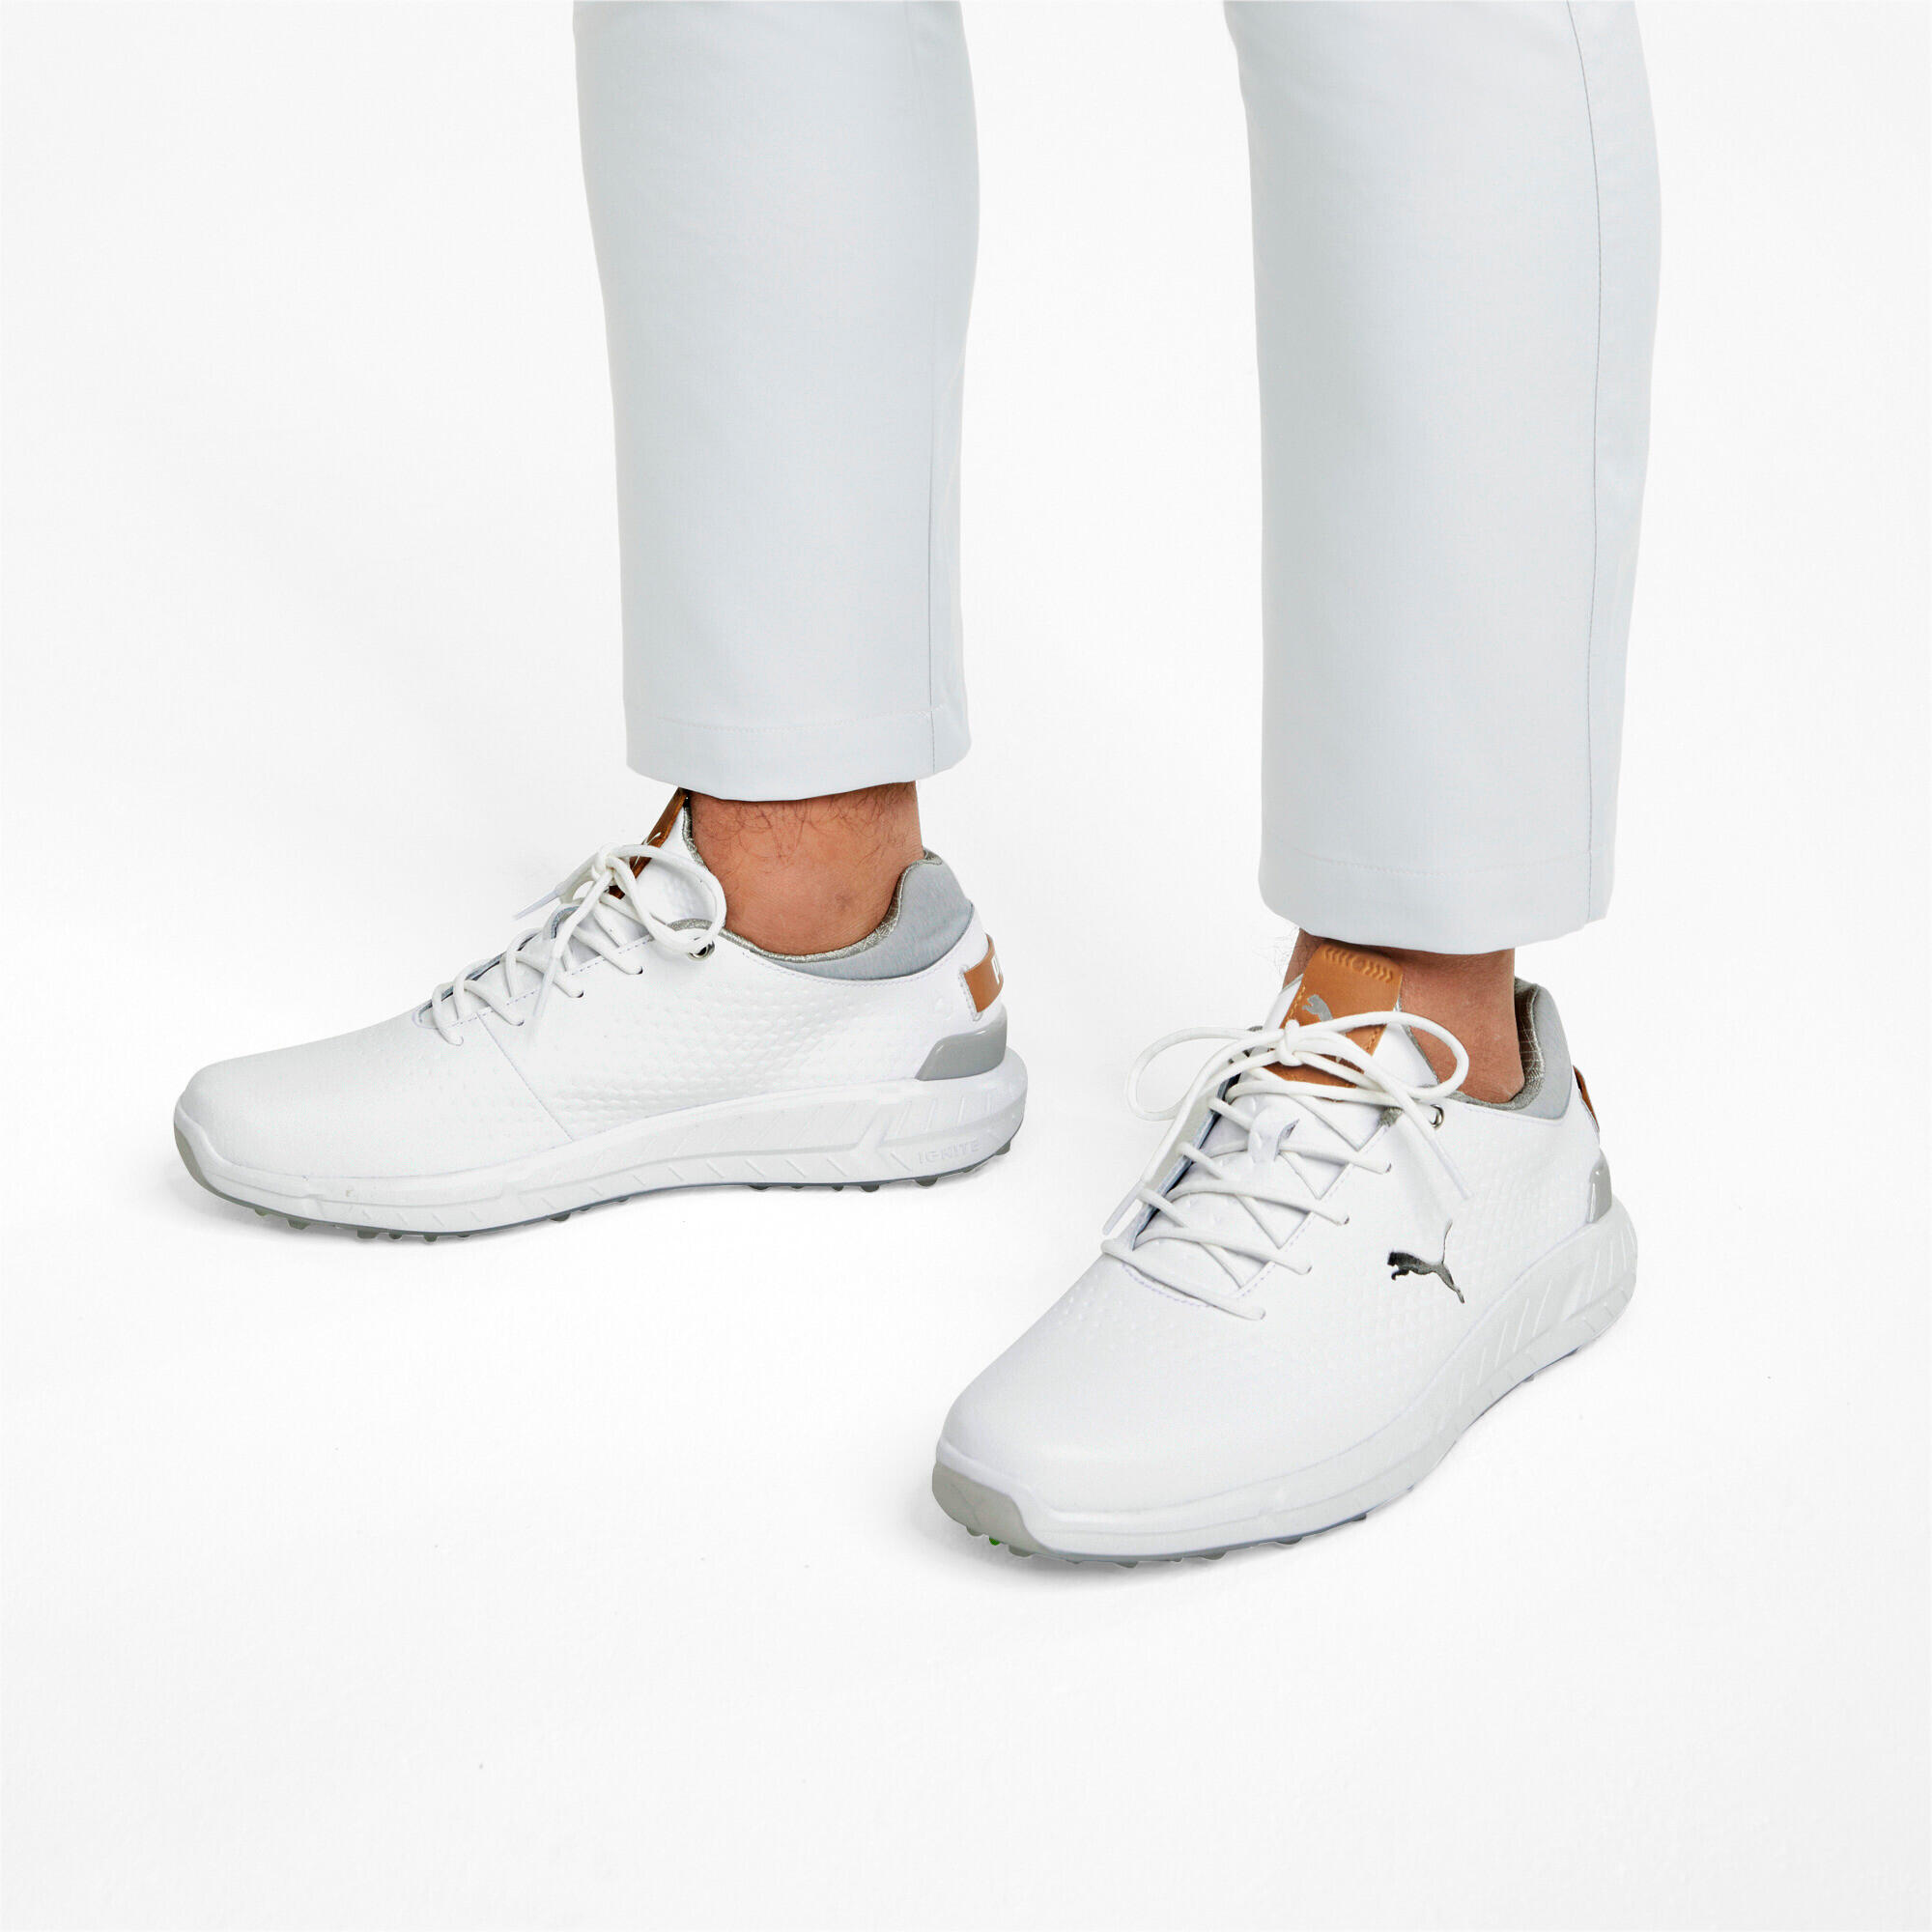 PUMA Mens IGNITE Articulate Leather Golf Shoes - White-Silver 3/7